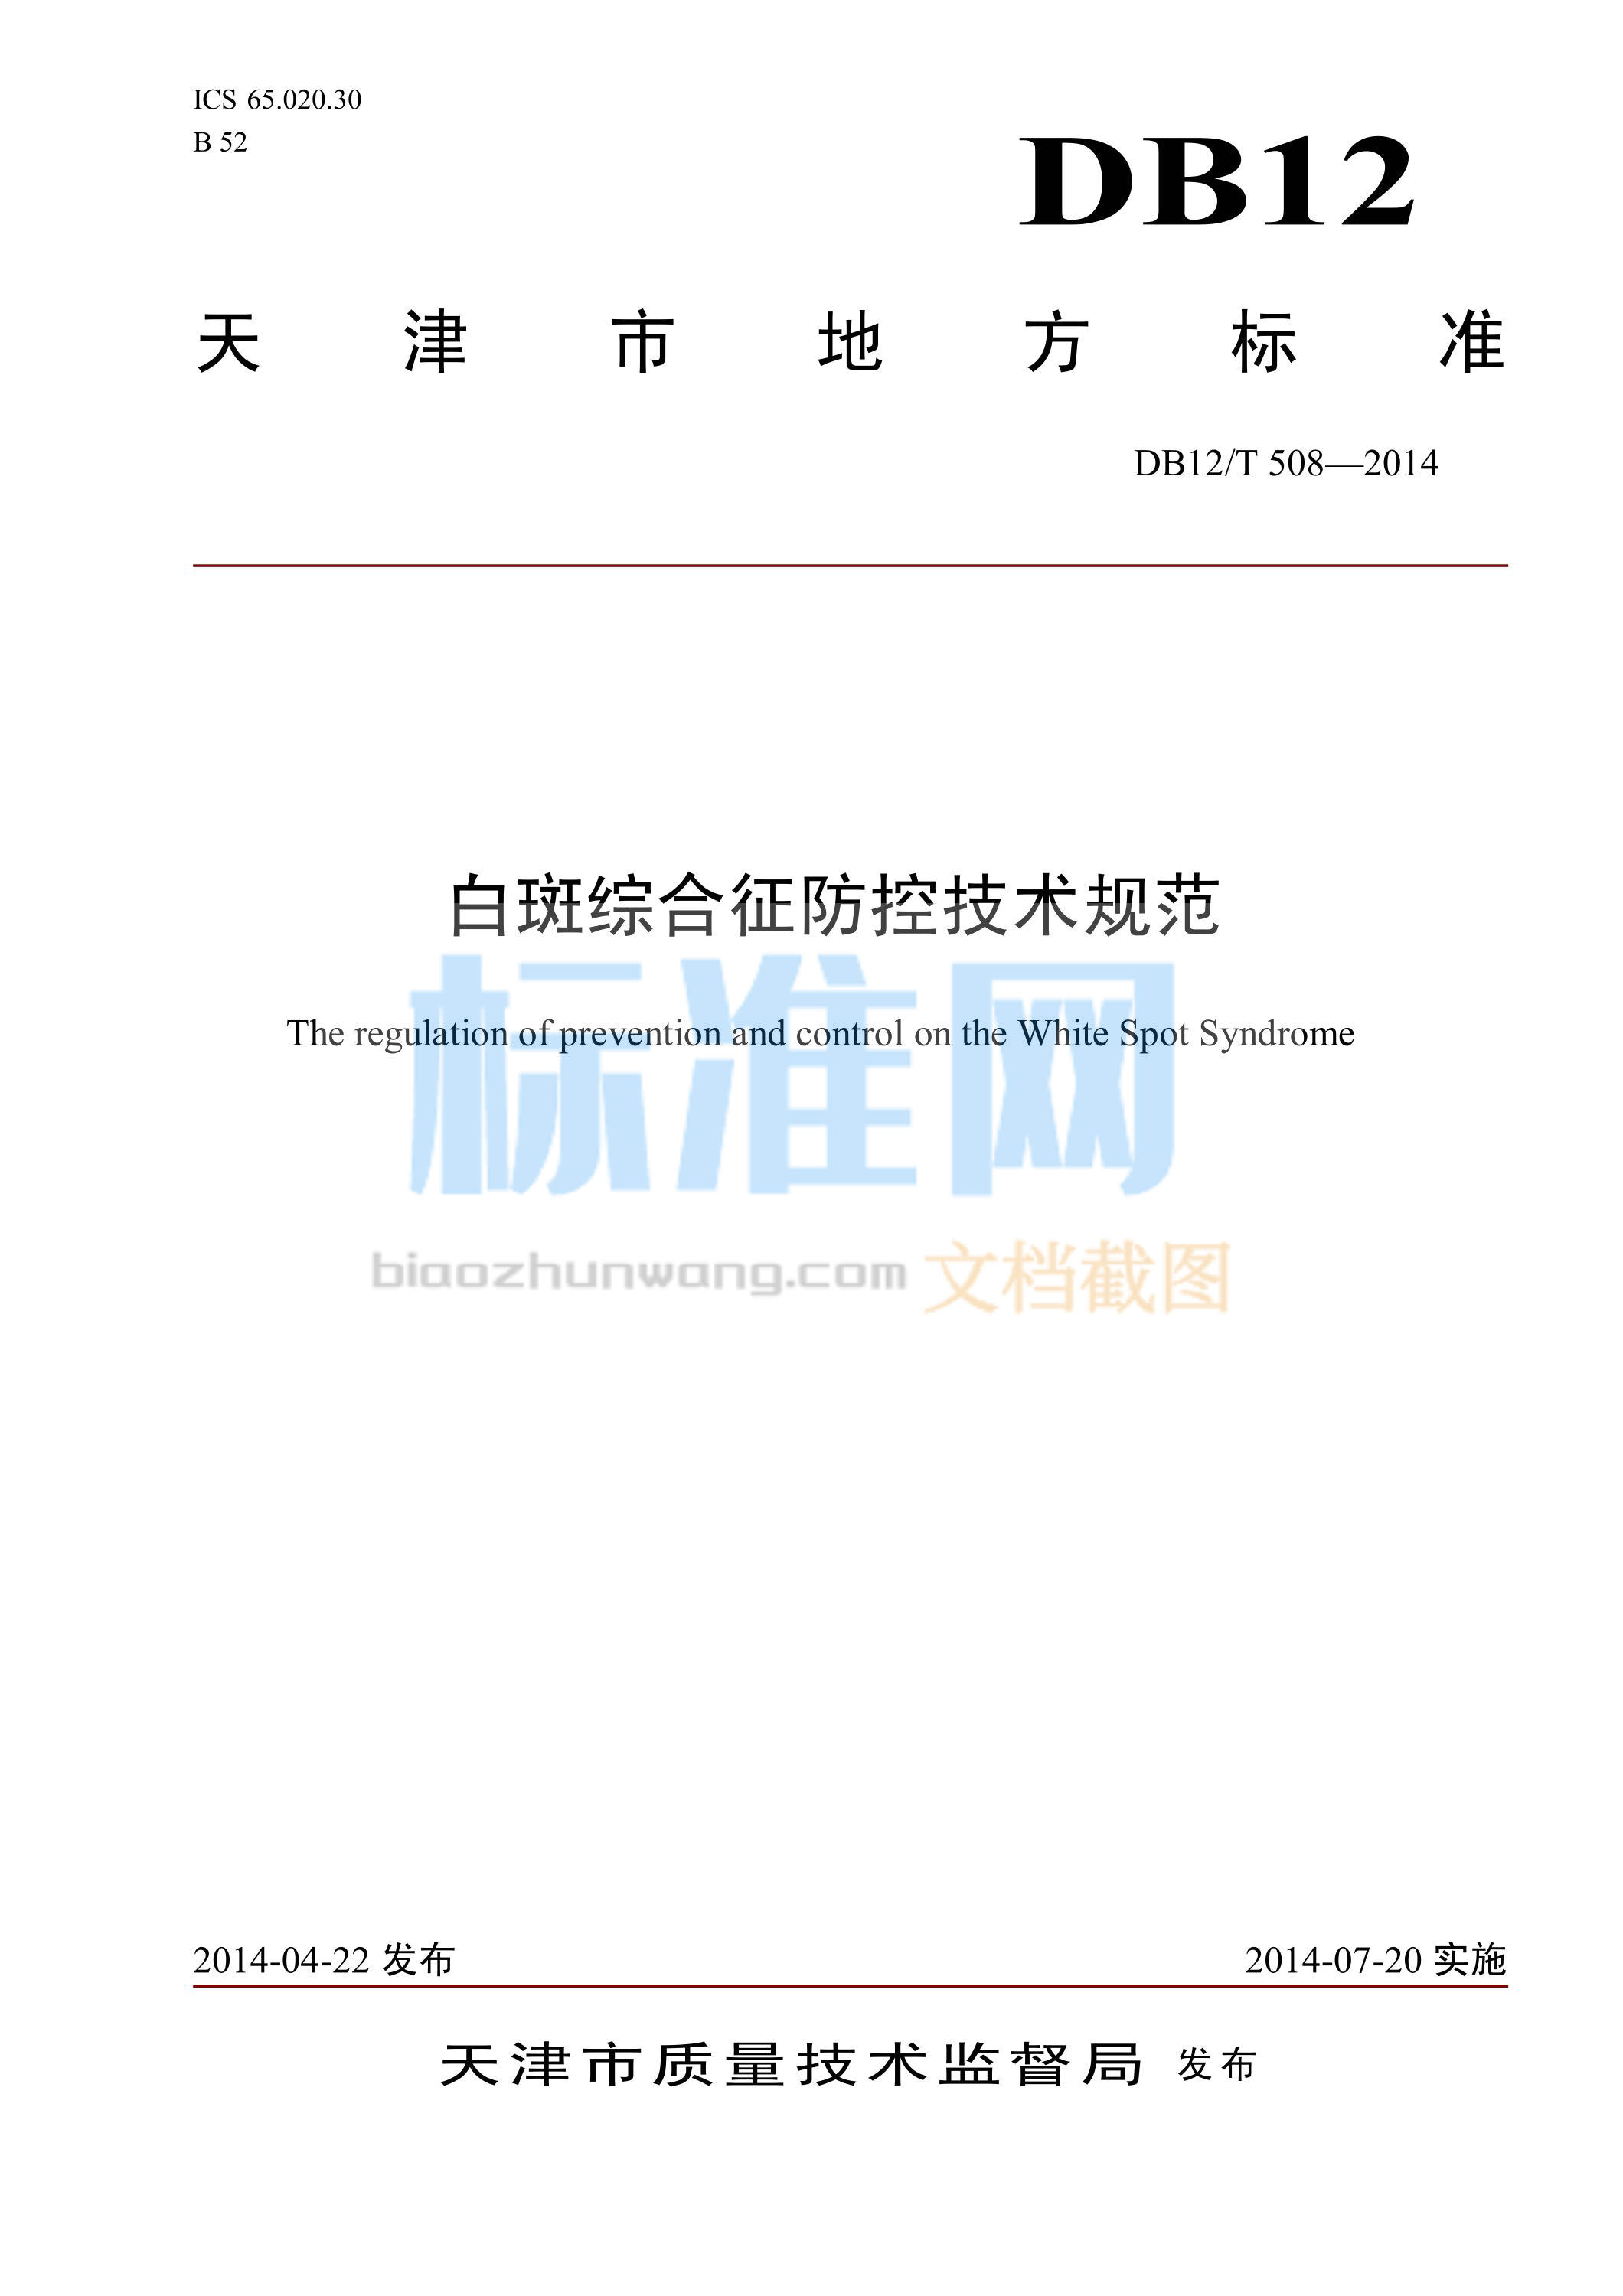 DB12/T 508-2014 白斑综合征防控技术规范